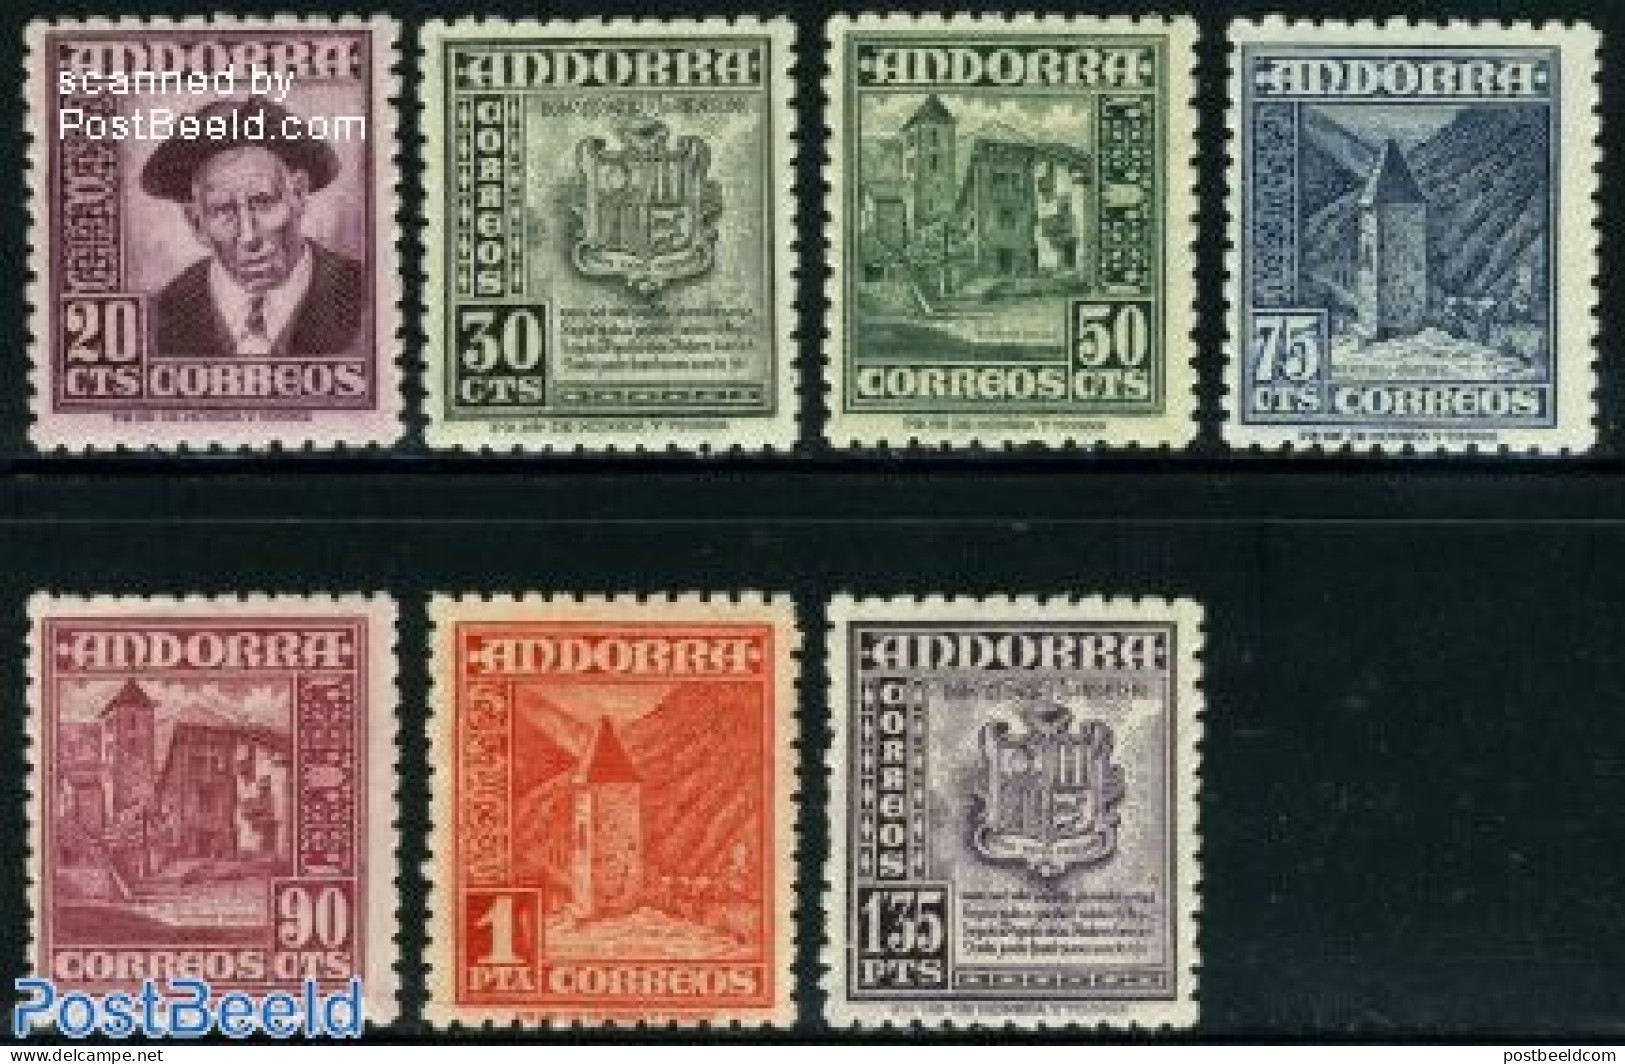 Andorra, Spanish Post 1948 Definitives, National Symbols 7v, Unused (hinged), History - Religion - Coat Of Arms - Chur.. - Neufs